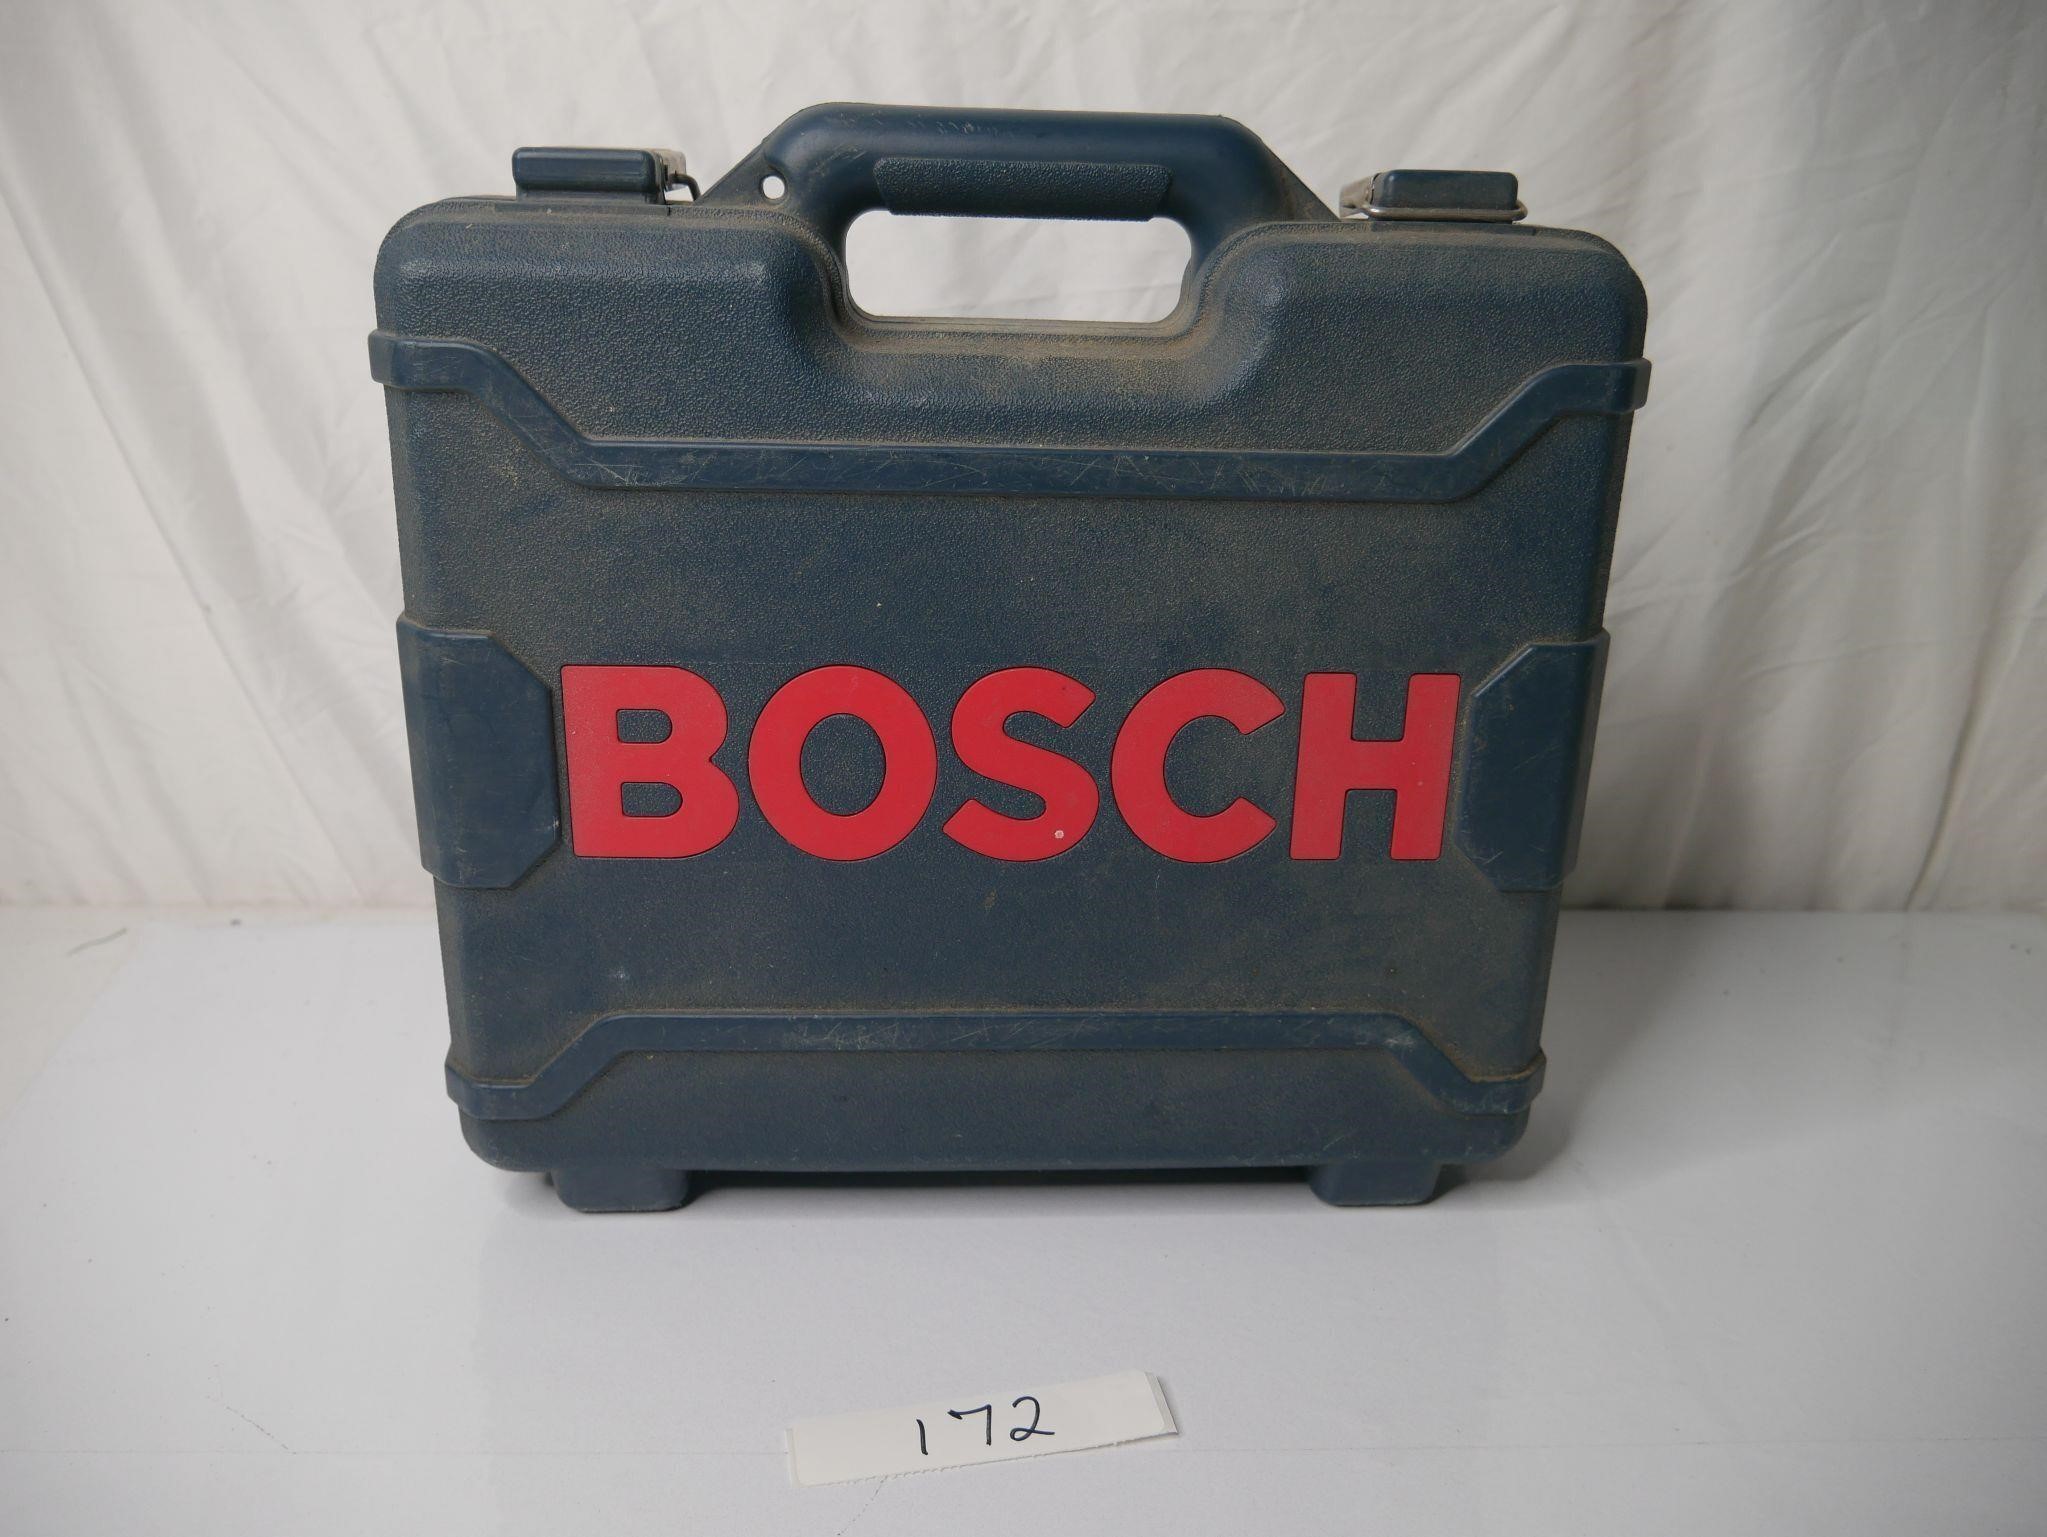 Bosch tool case